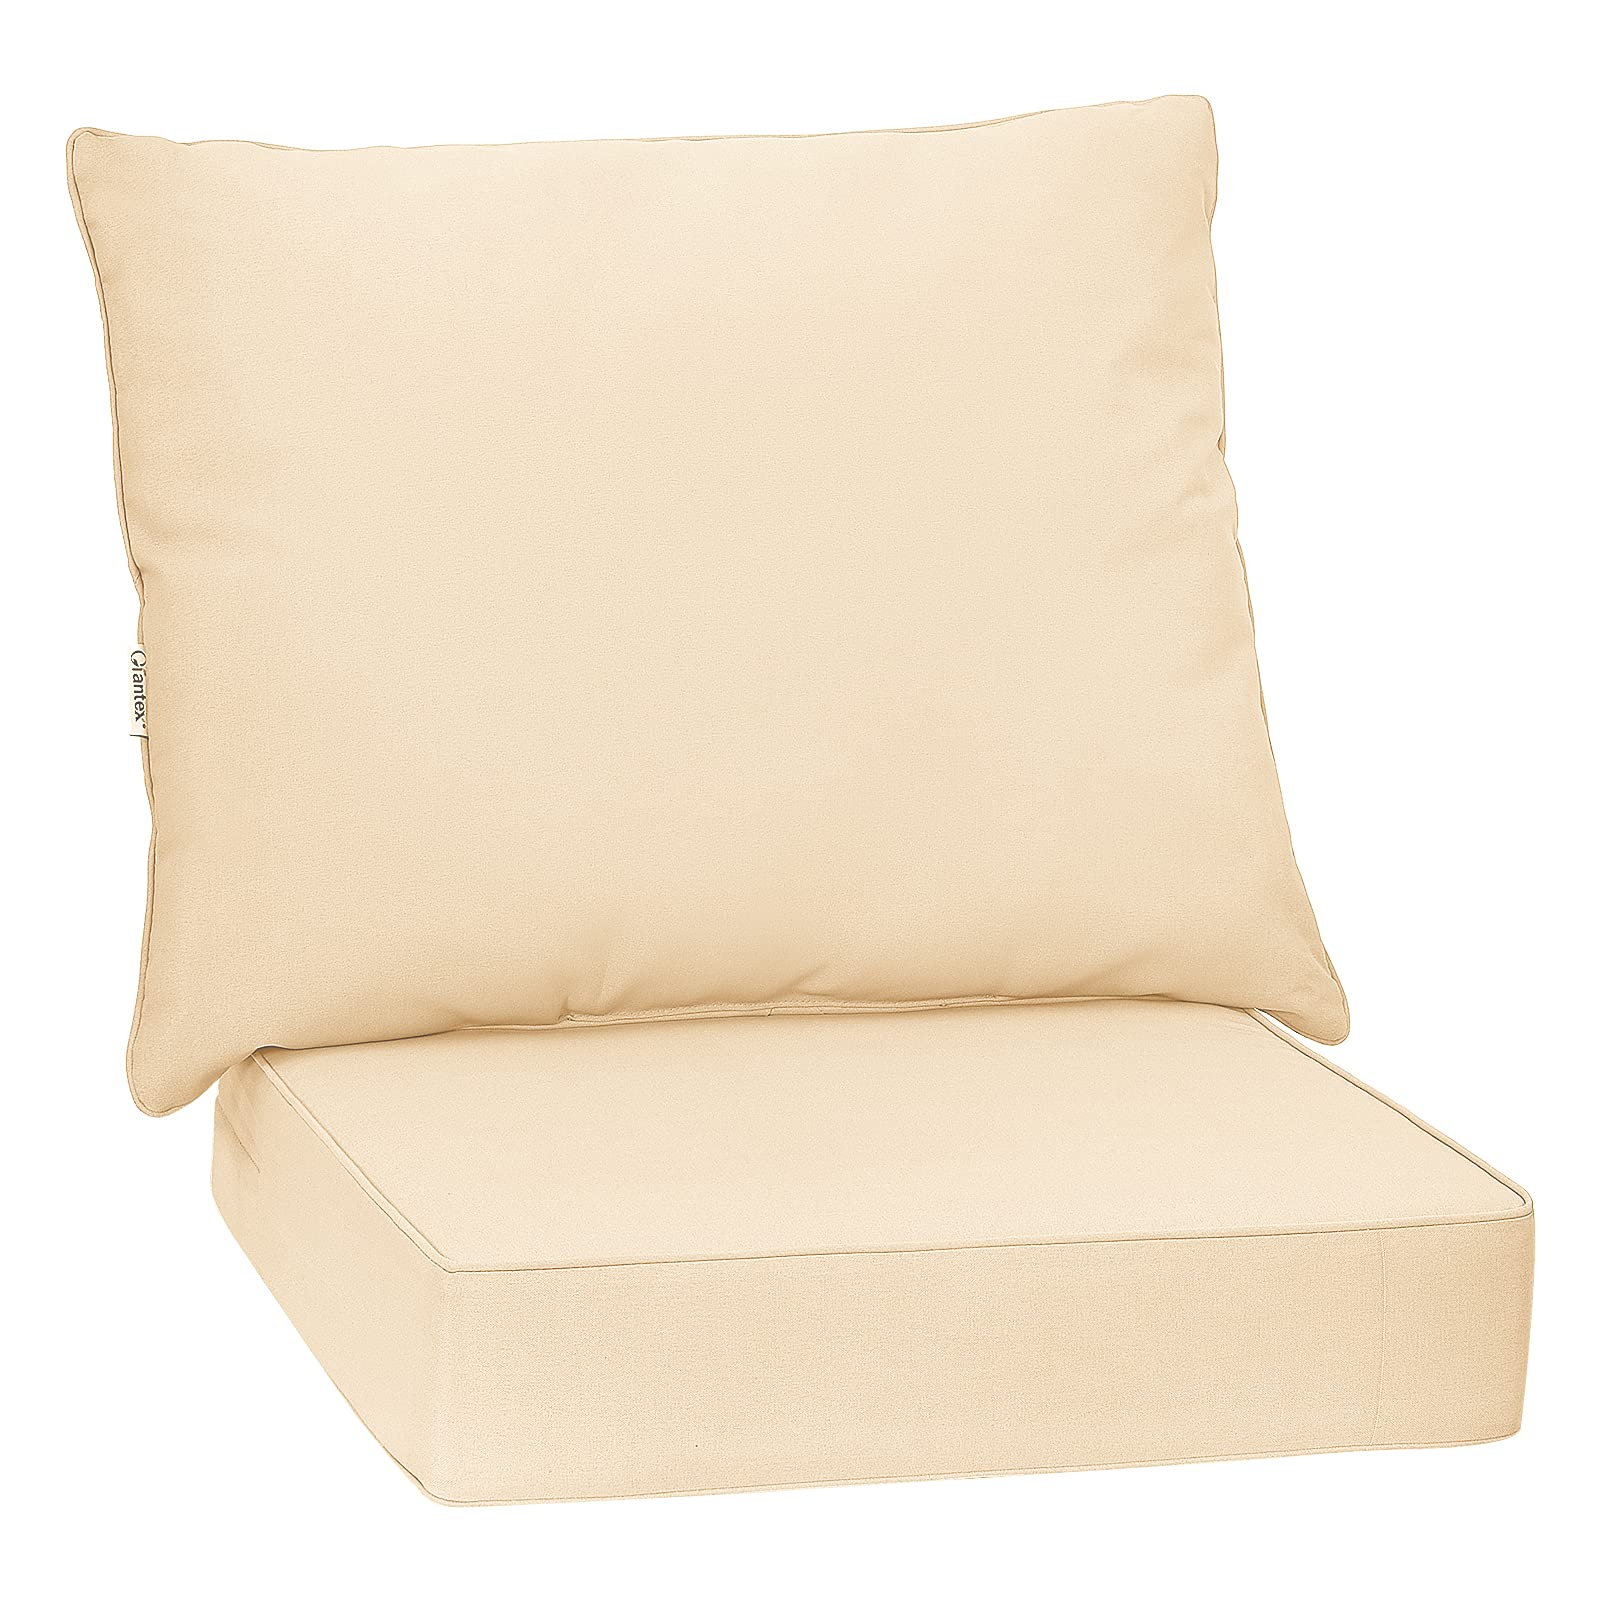 Giantex Patio Cushion Set with Pillow, Deep Seat and Back Cushion